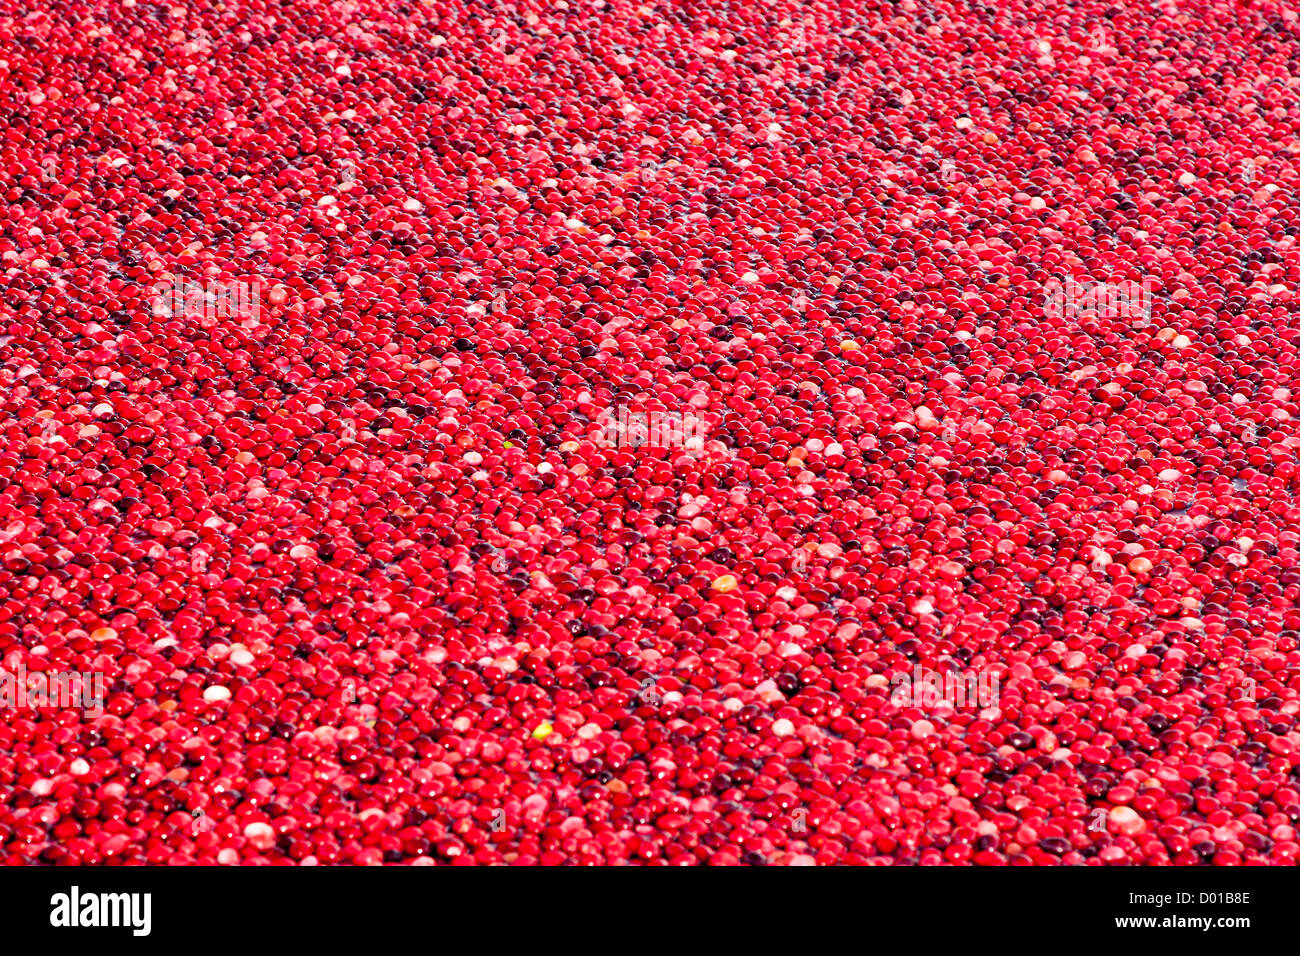 Raw Cranberries Oxycoccus Vaccinium USA Stock Photo